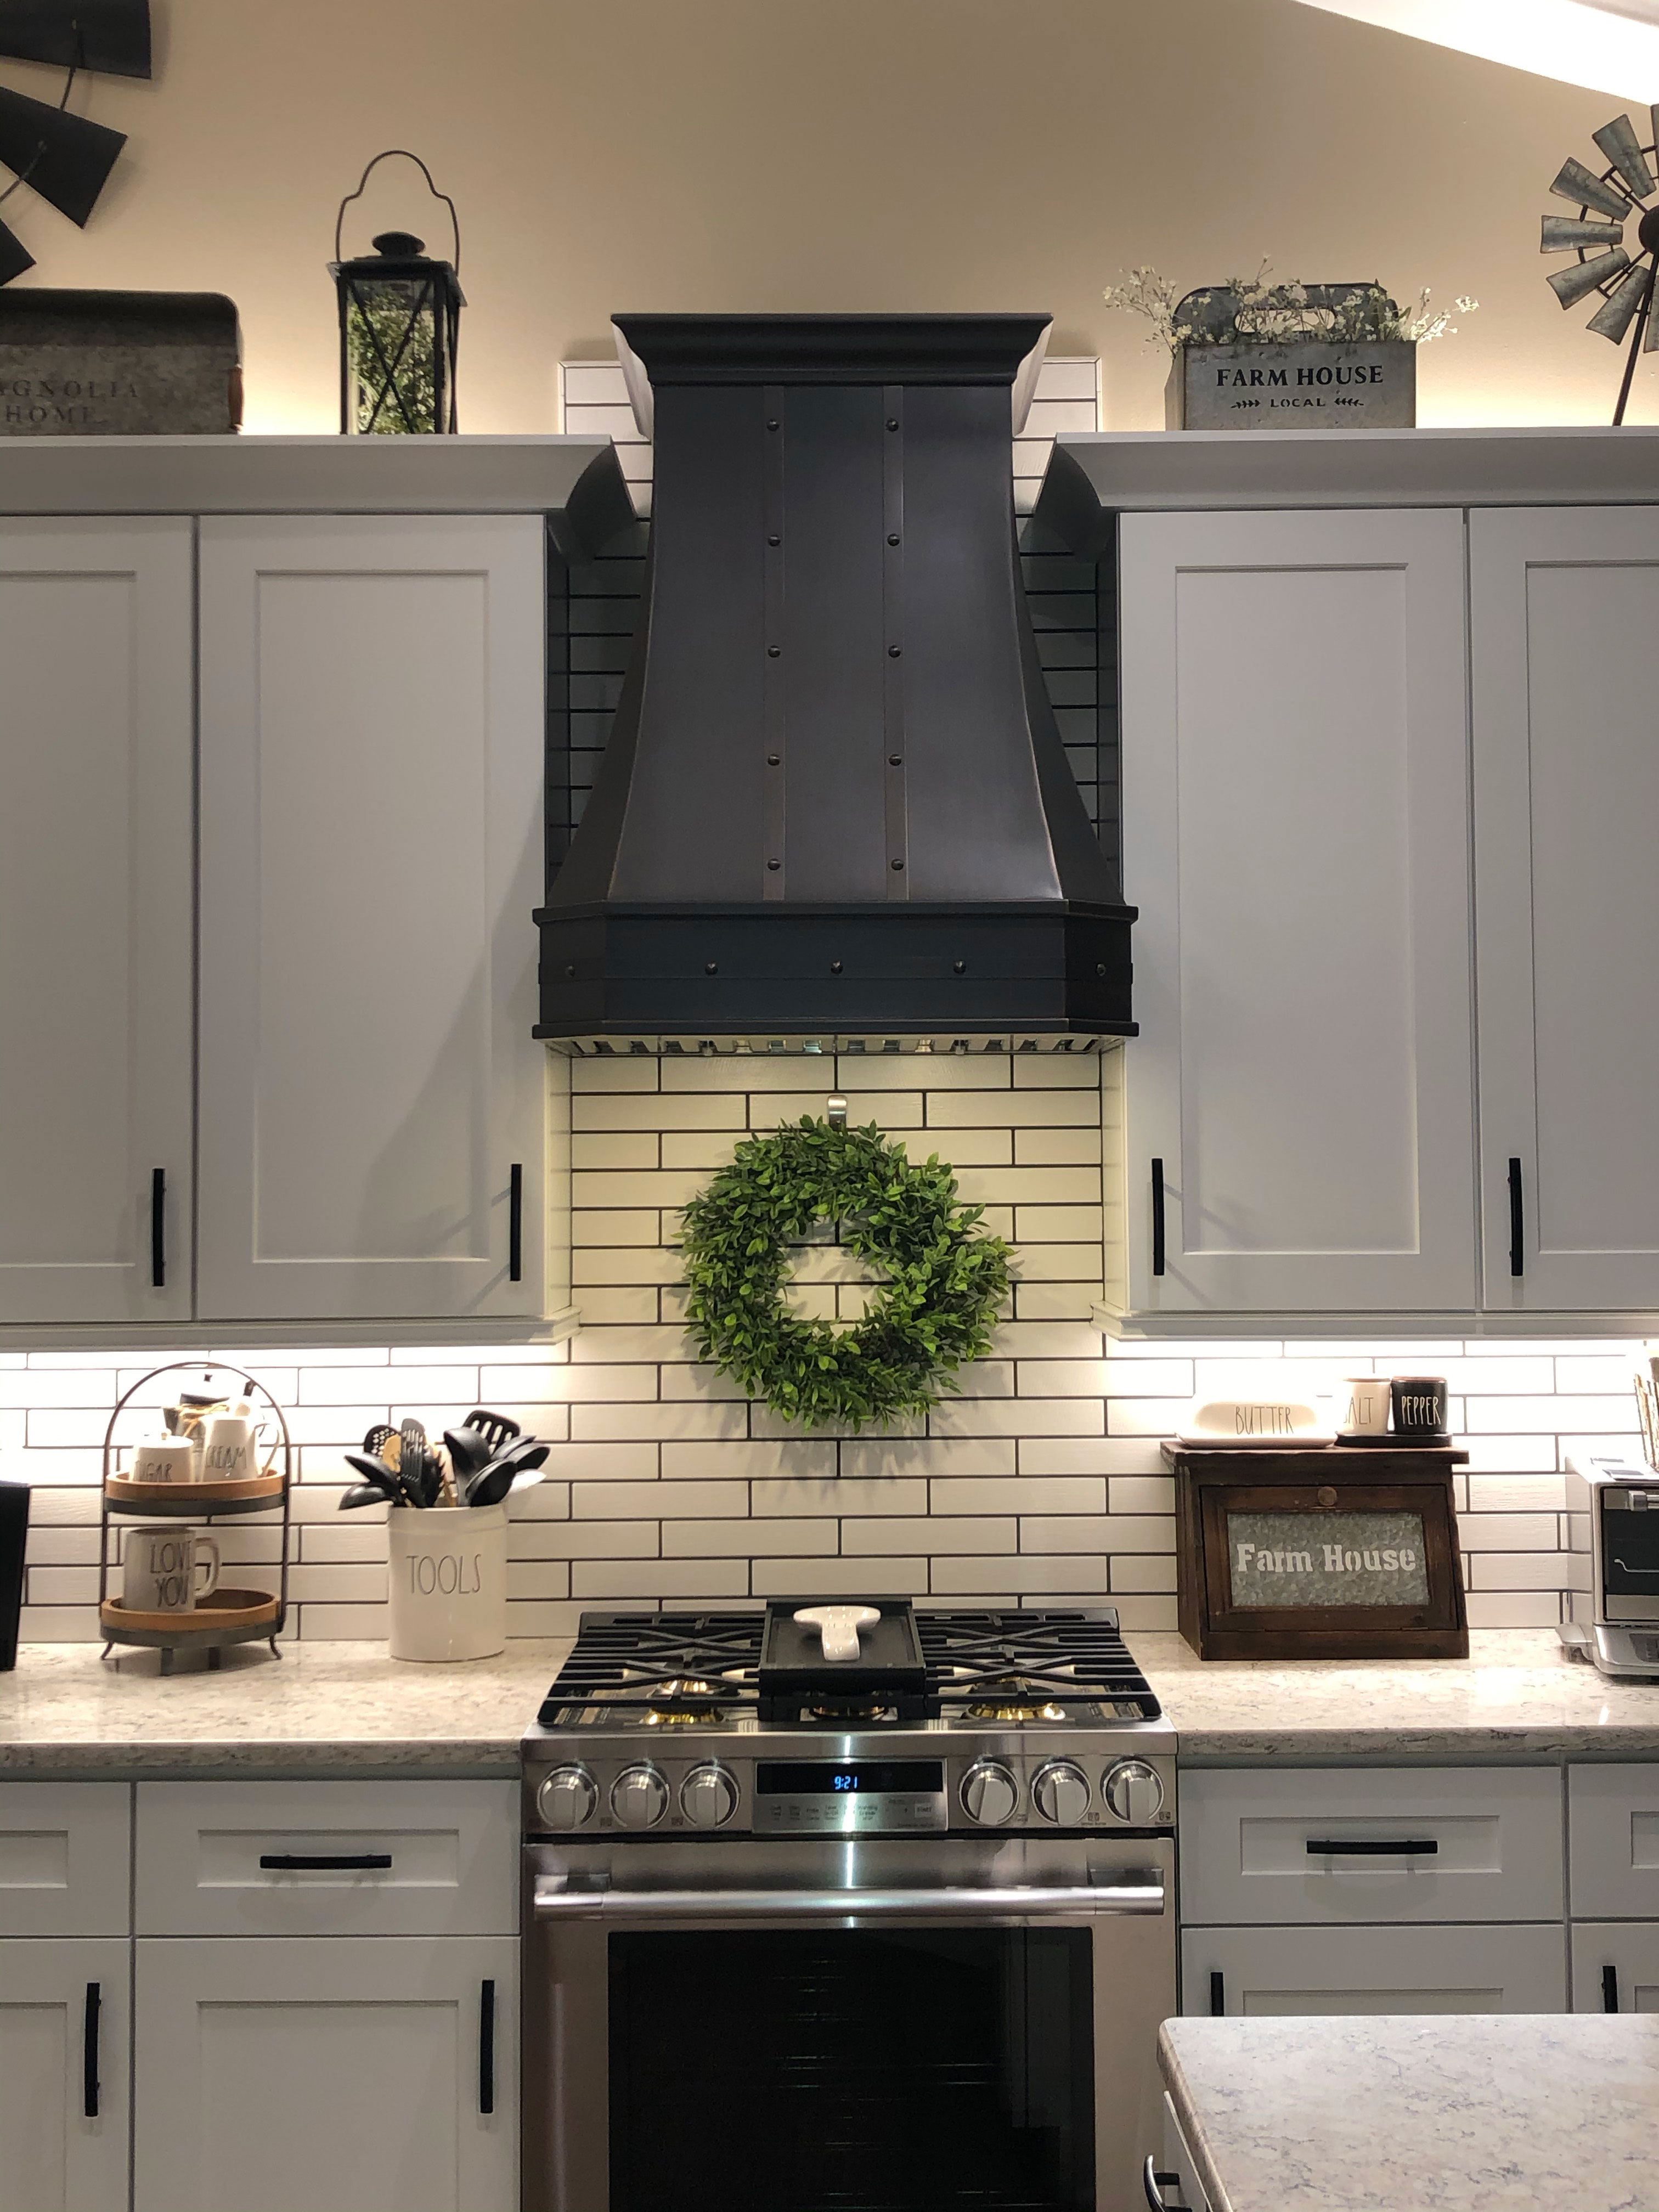 Experience french kitchen design with white cabinets, elegant grey kitchen countertops, captivating brick backsplash with range hood